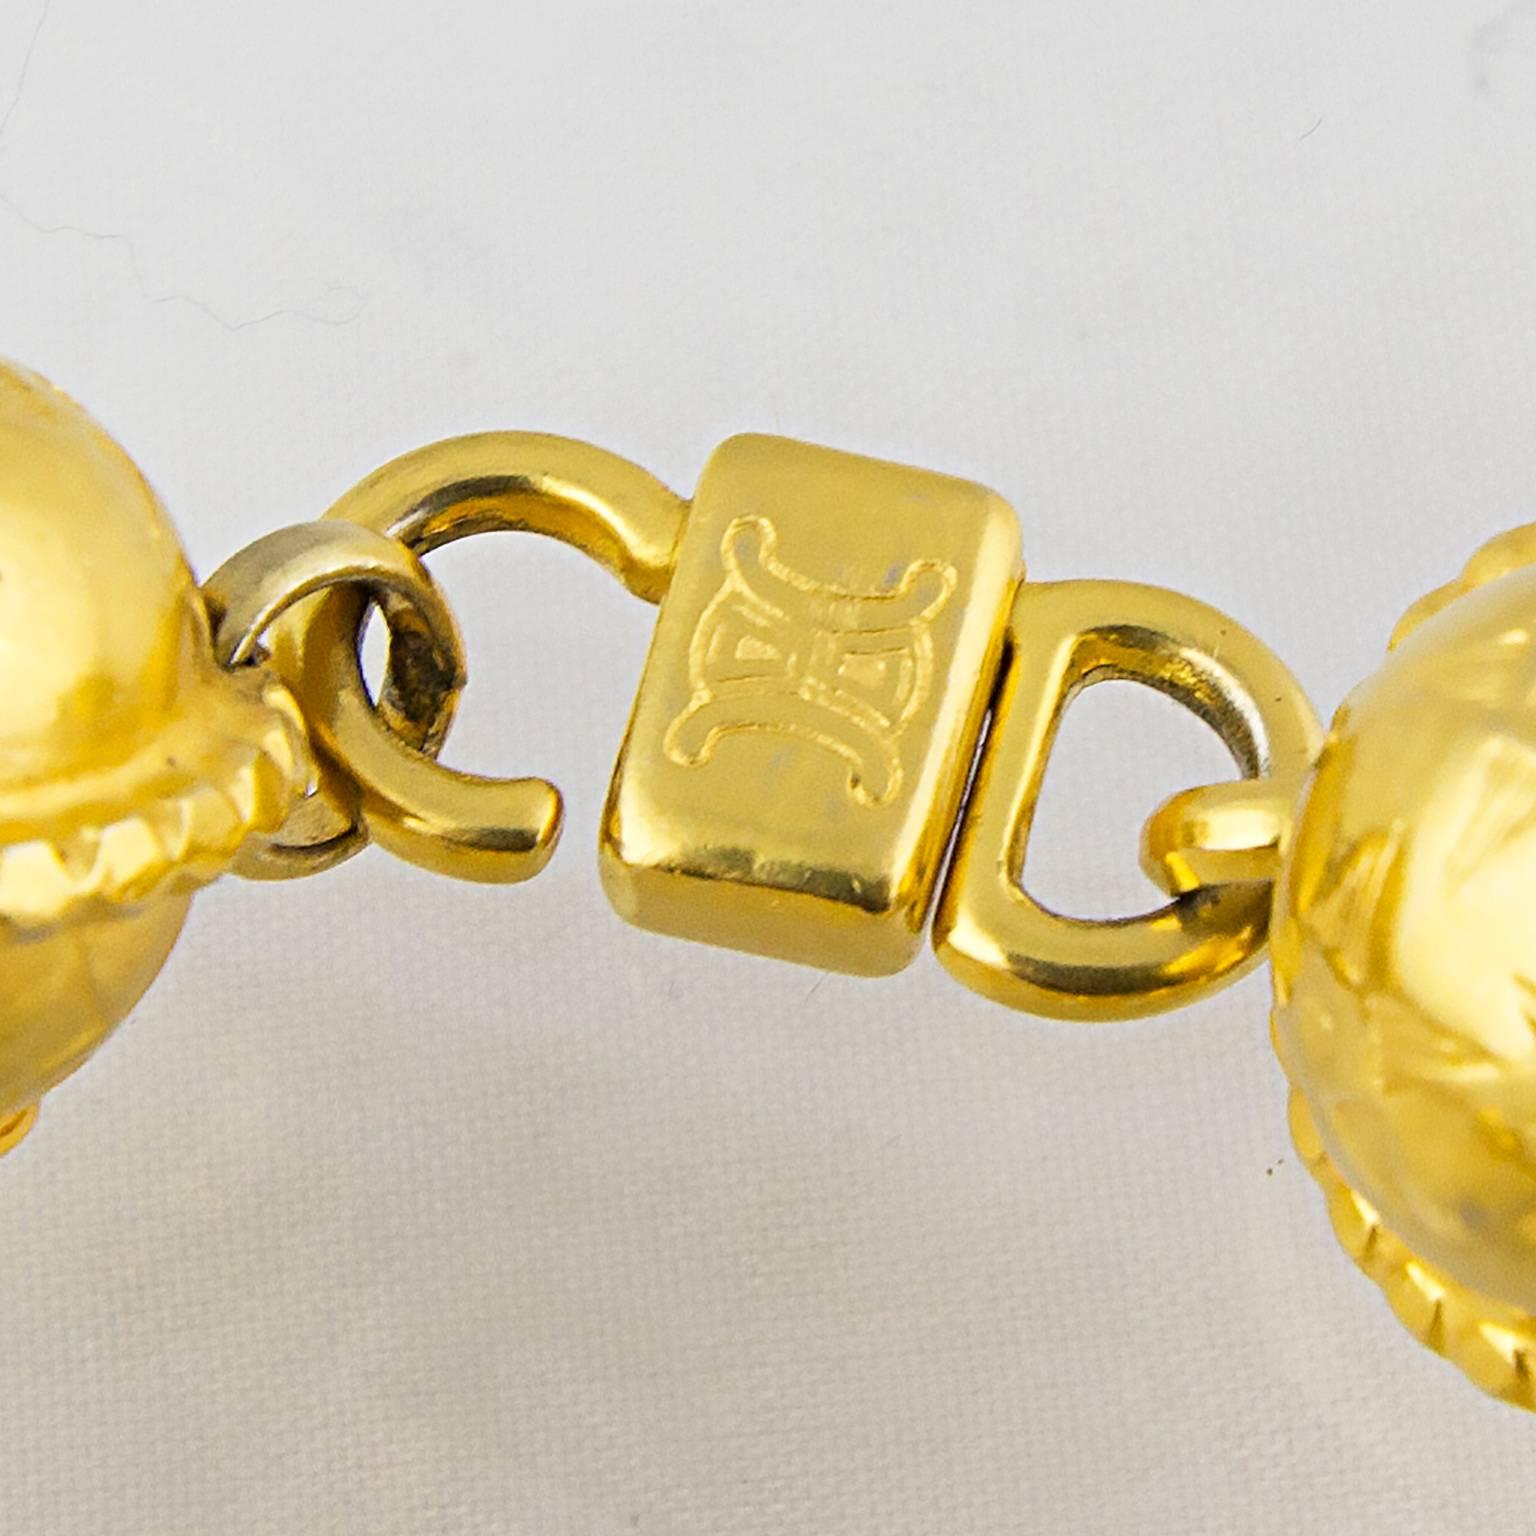 High carat gold plated metal.
Celine twist logo clasp.
A great fashion piece!